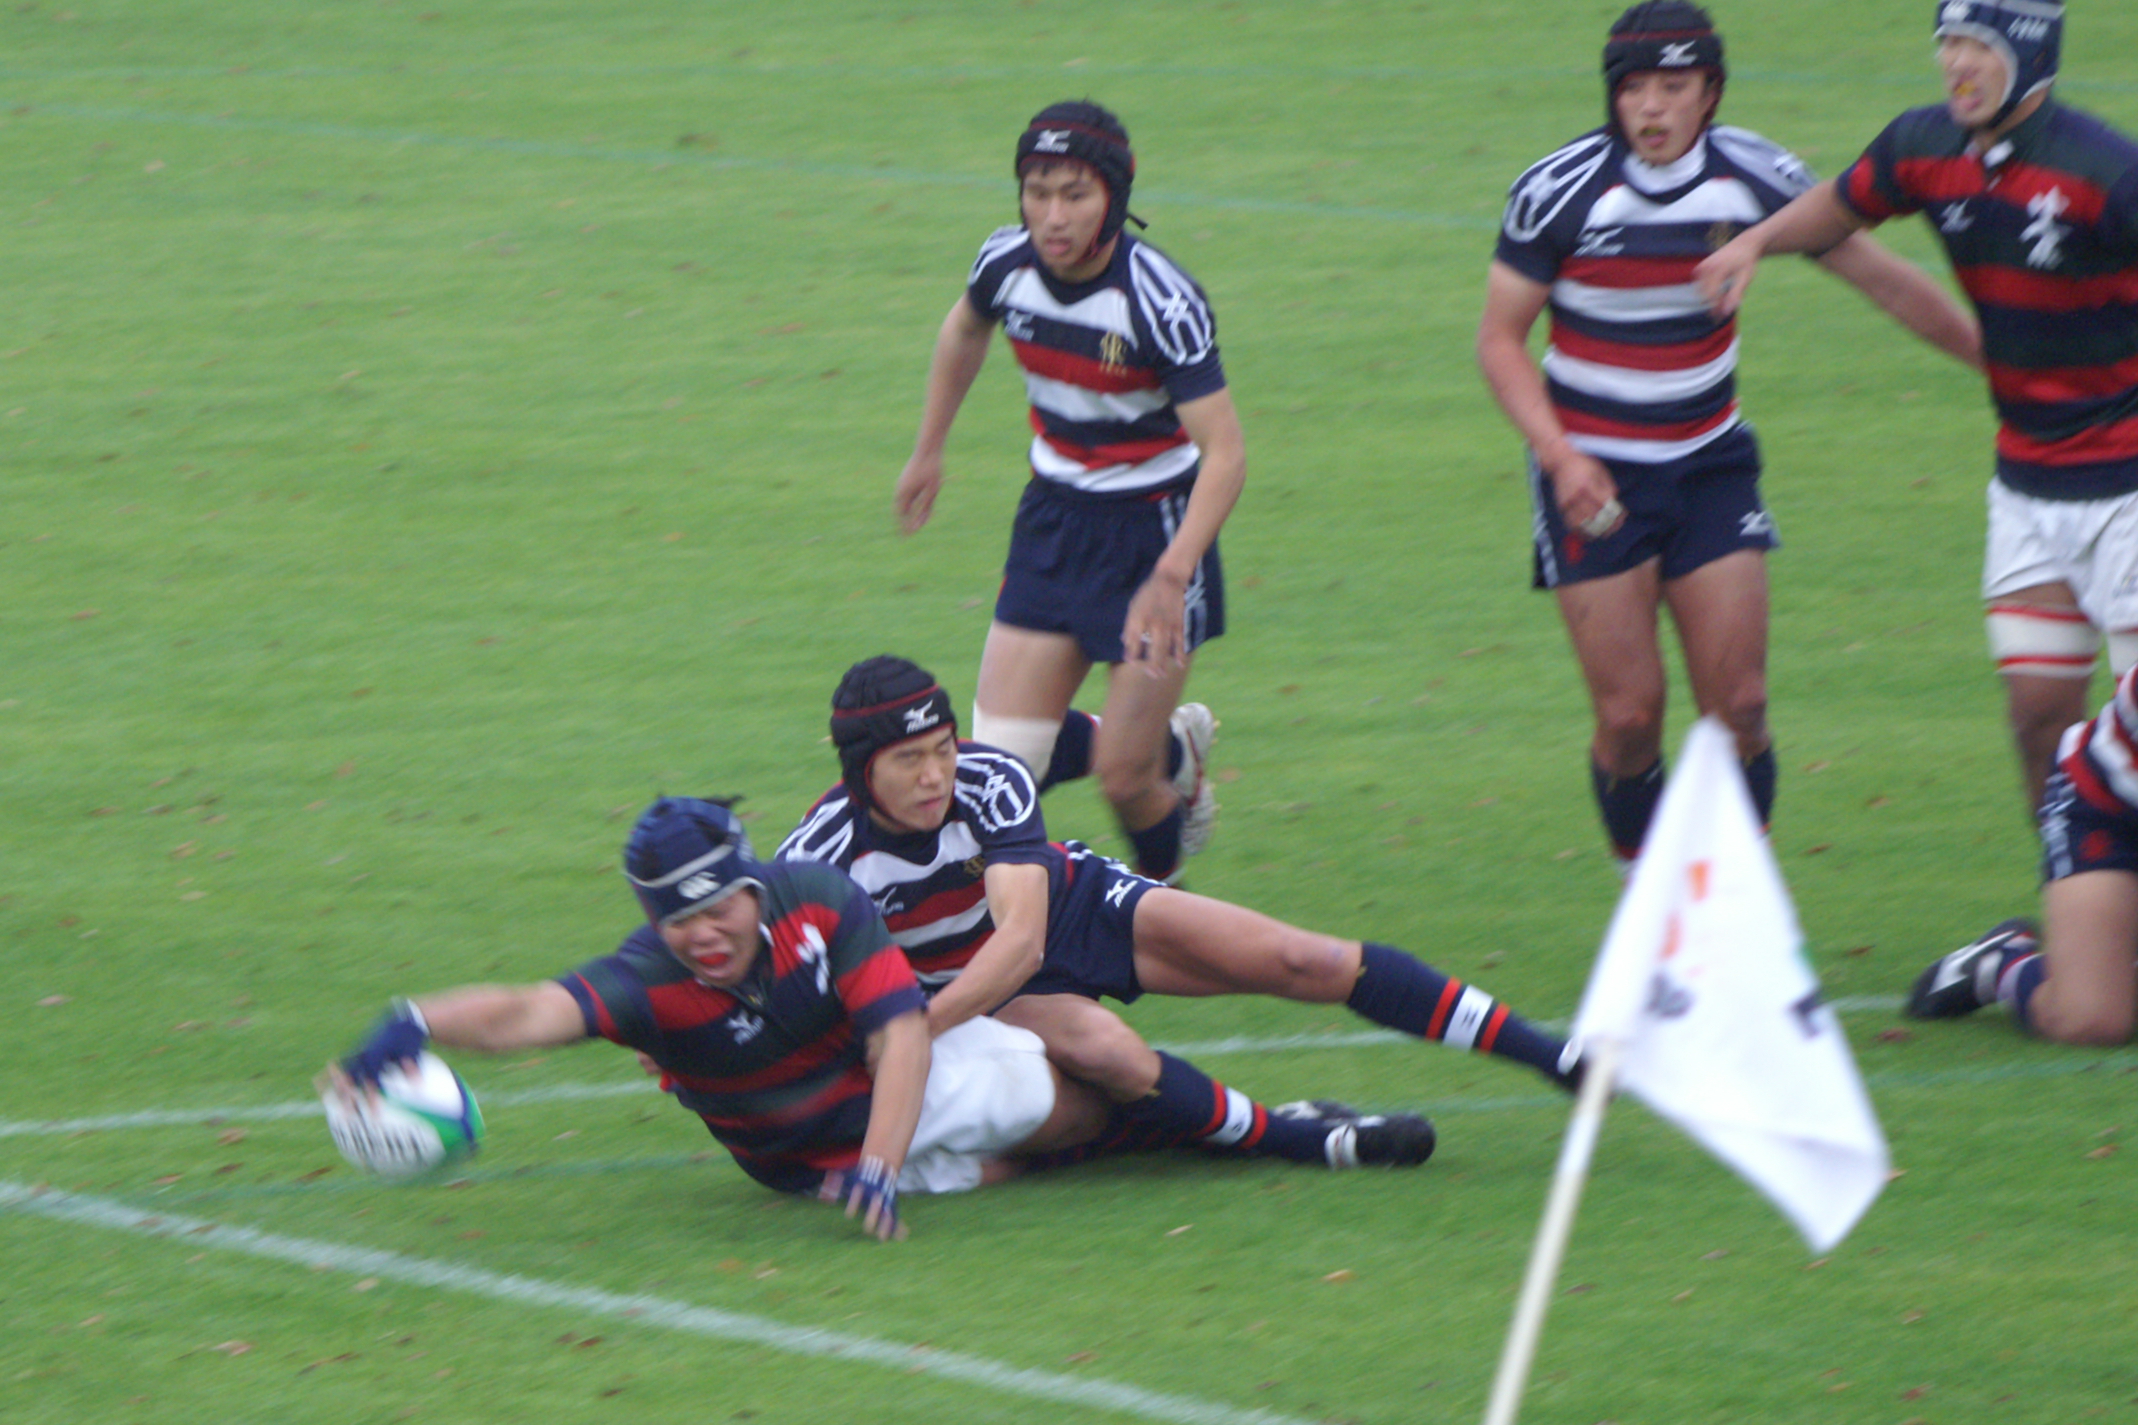 http://kokura-rugby.sakura.ne.jp/2009.12.5-2.JPG